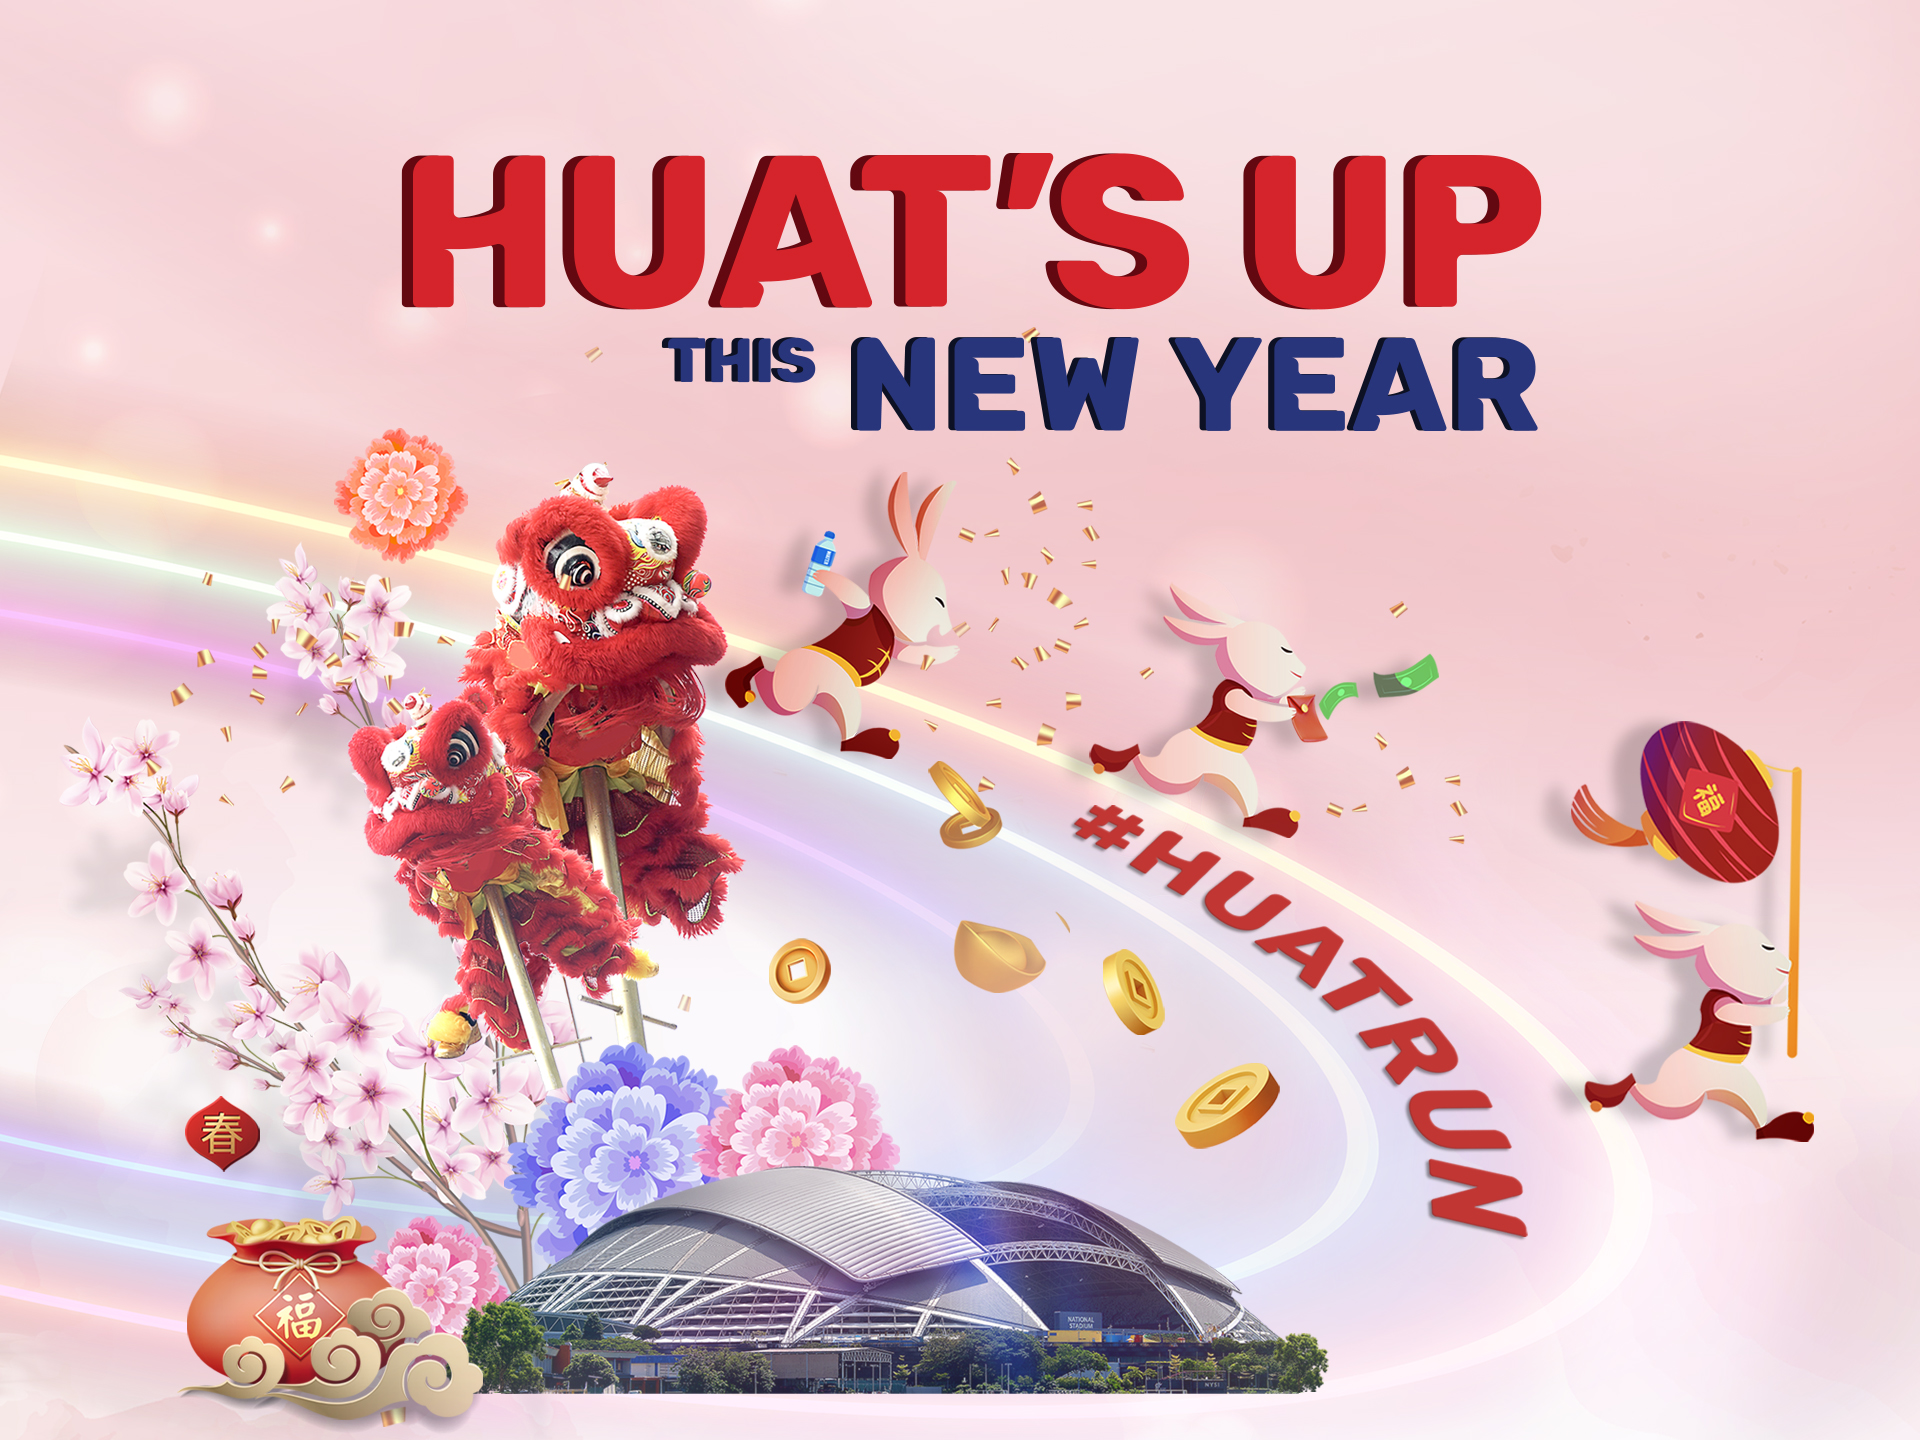 HUAT’S UP AT SINGAPORE SPORTS HUB THIS CHINESE NEW YEAR